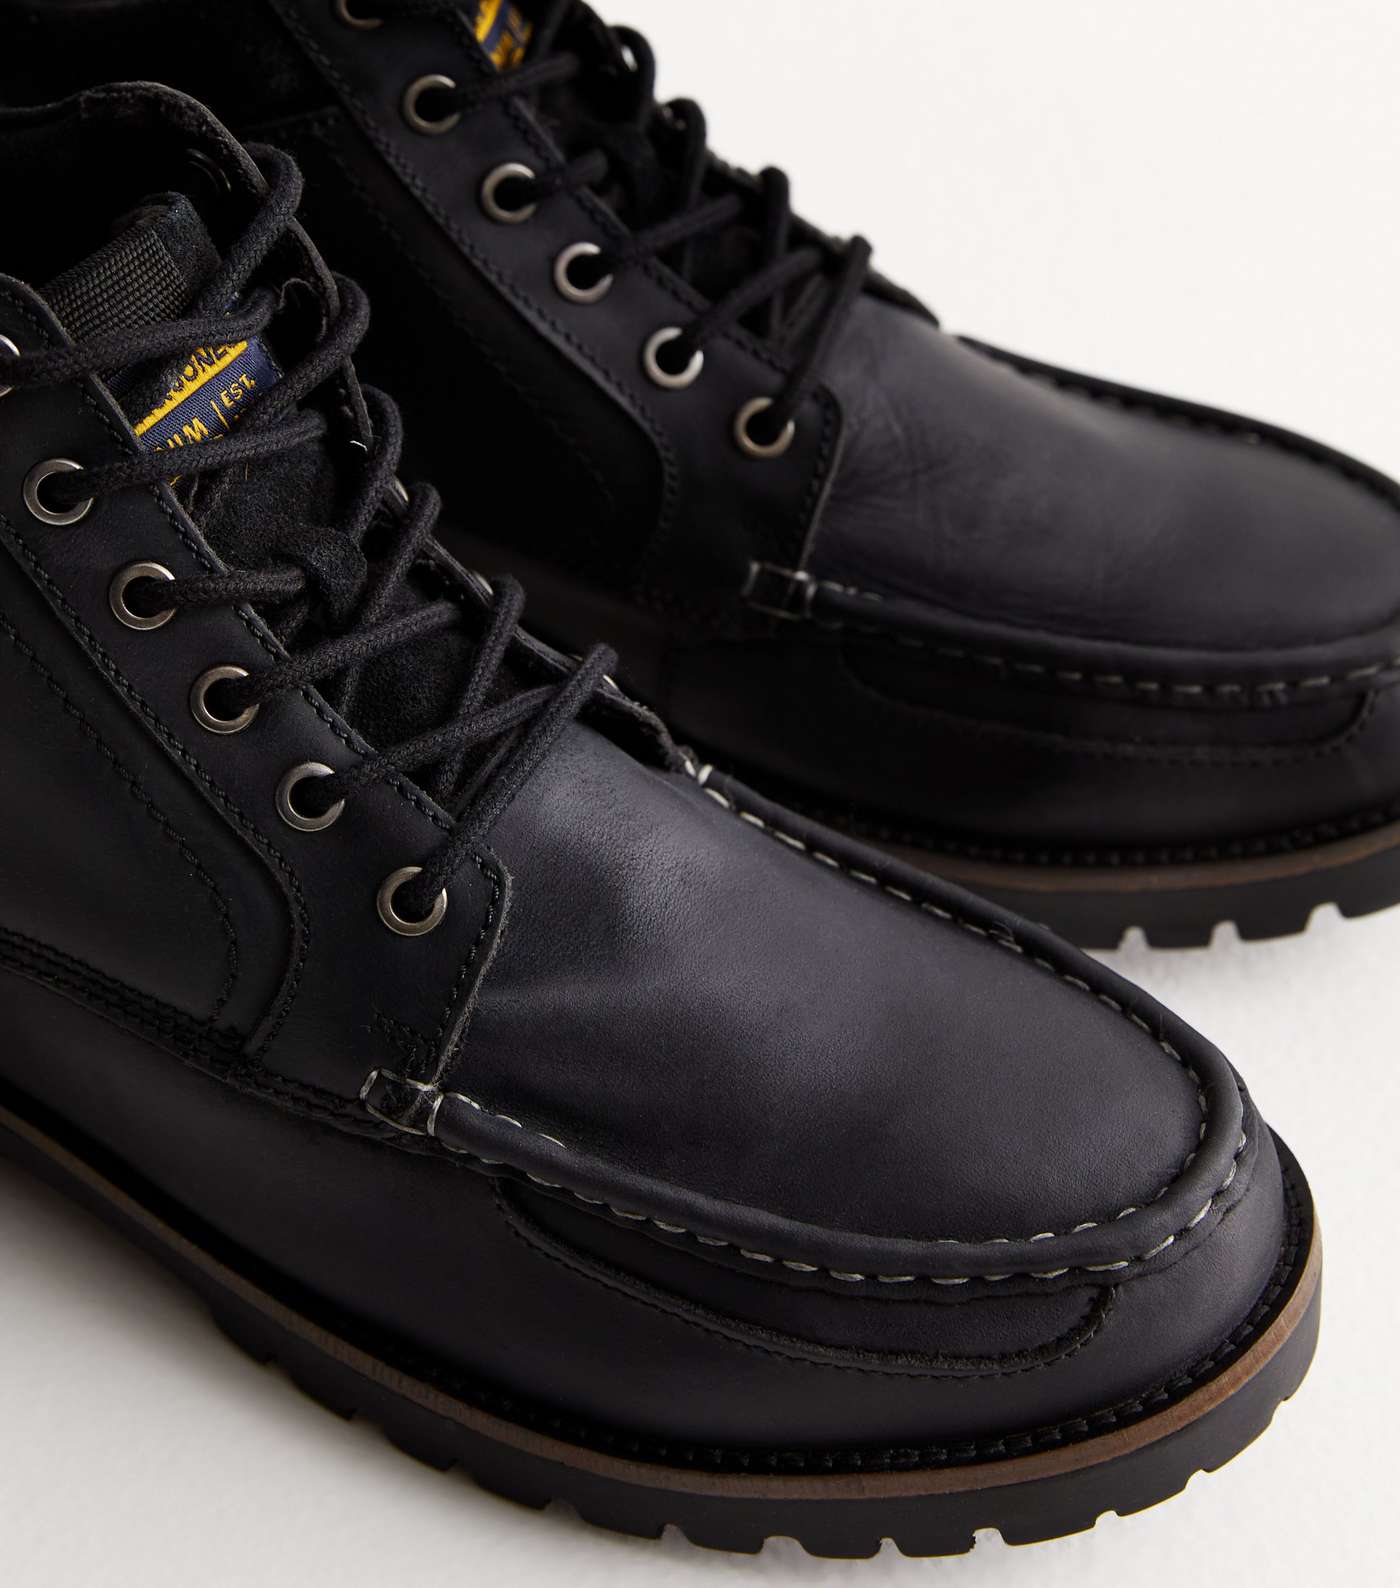 Jack & Jones Black Leather-Look Boots Image 4